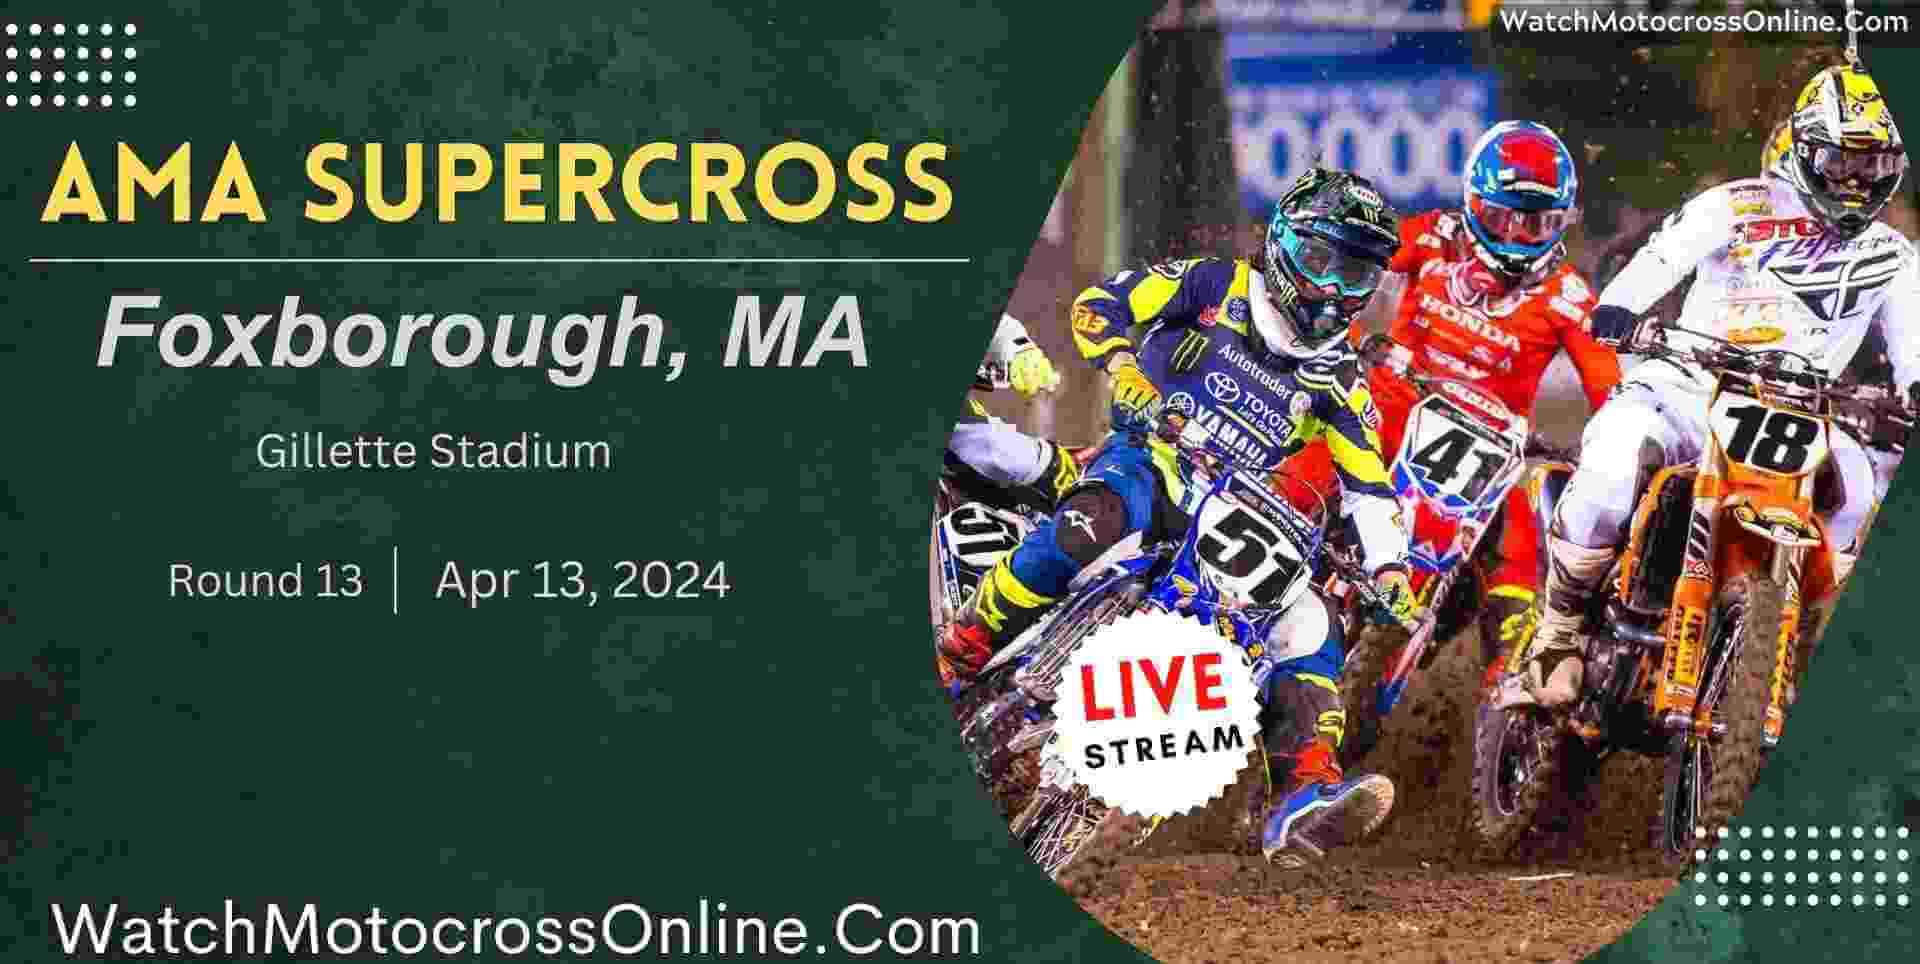 AMA Supercross Foxborough Live Stream 2024 Round 13